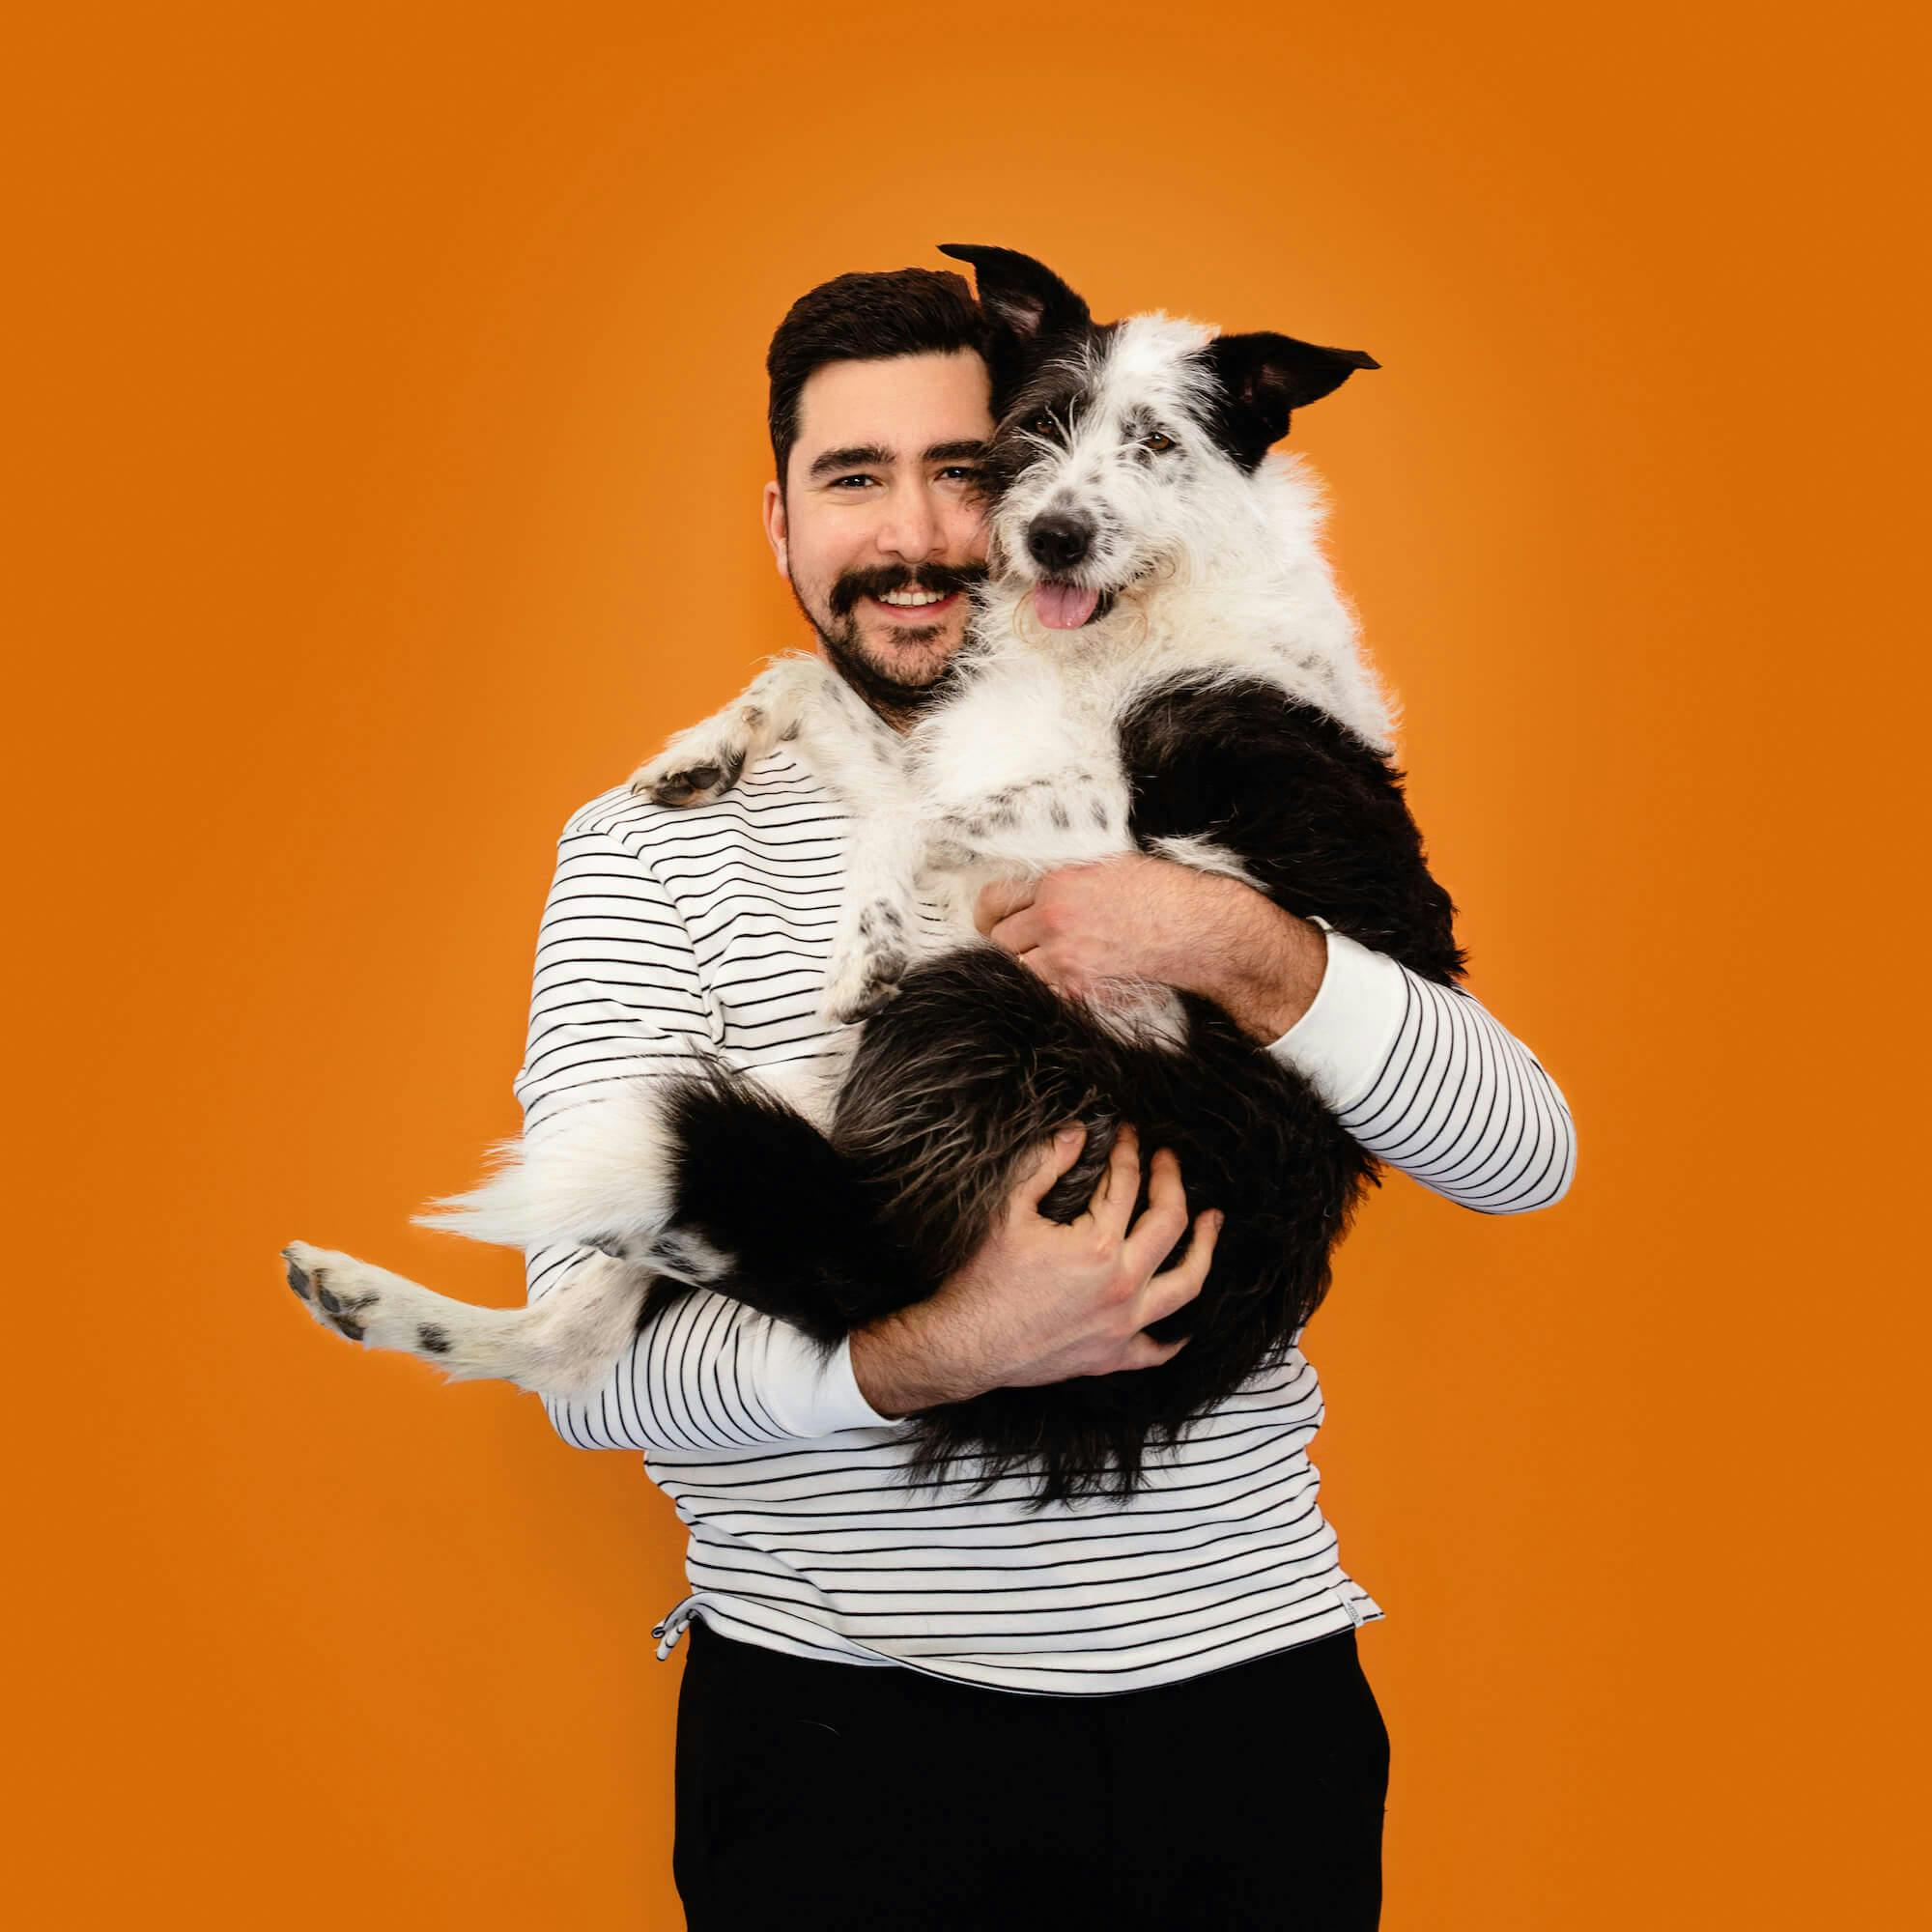 Smiling man holding a dog